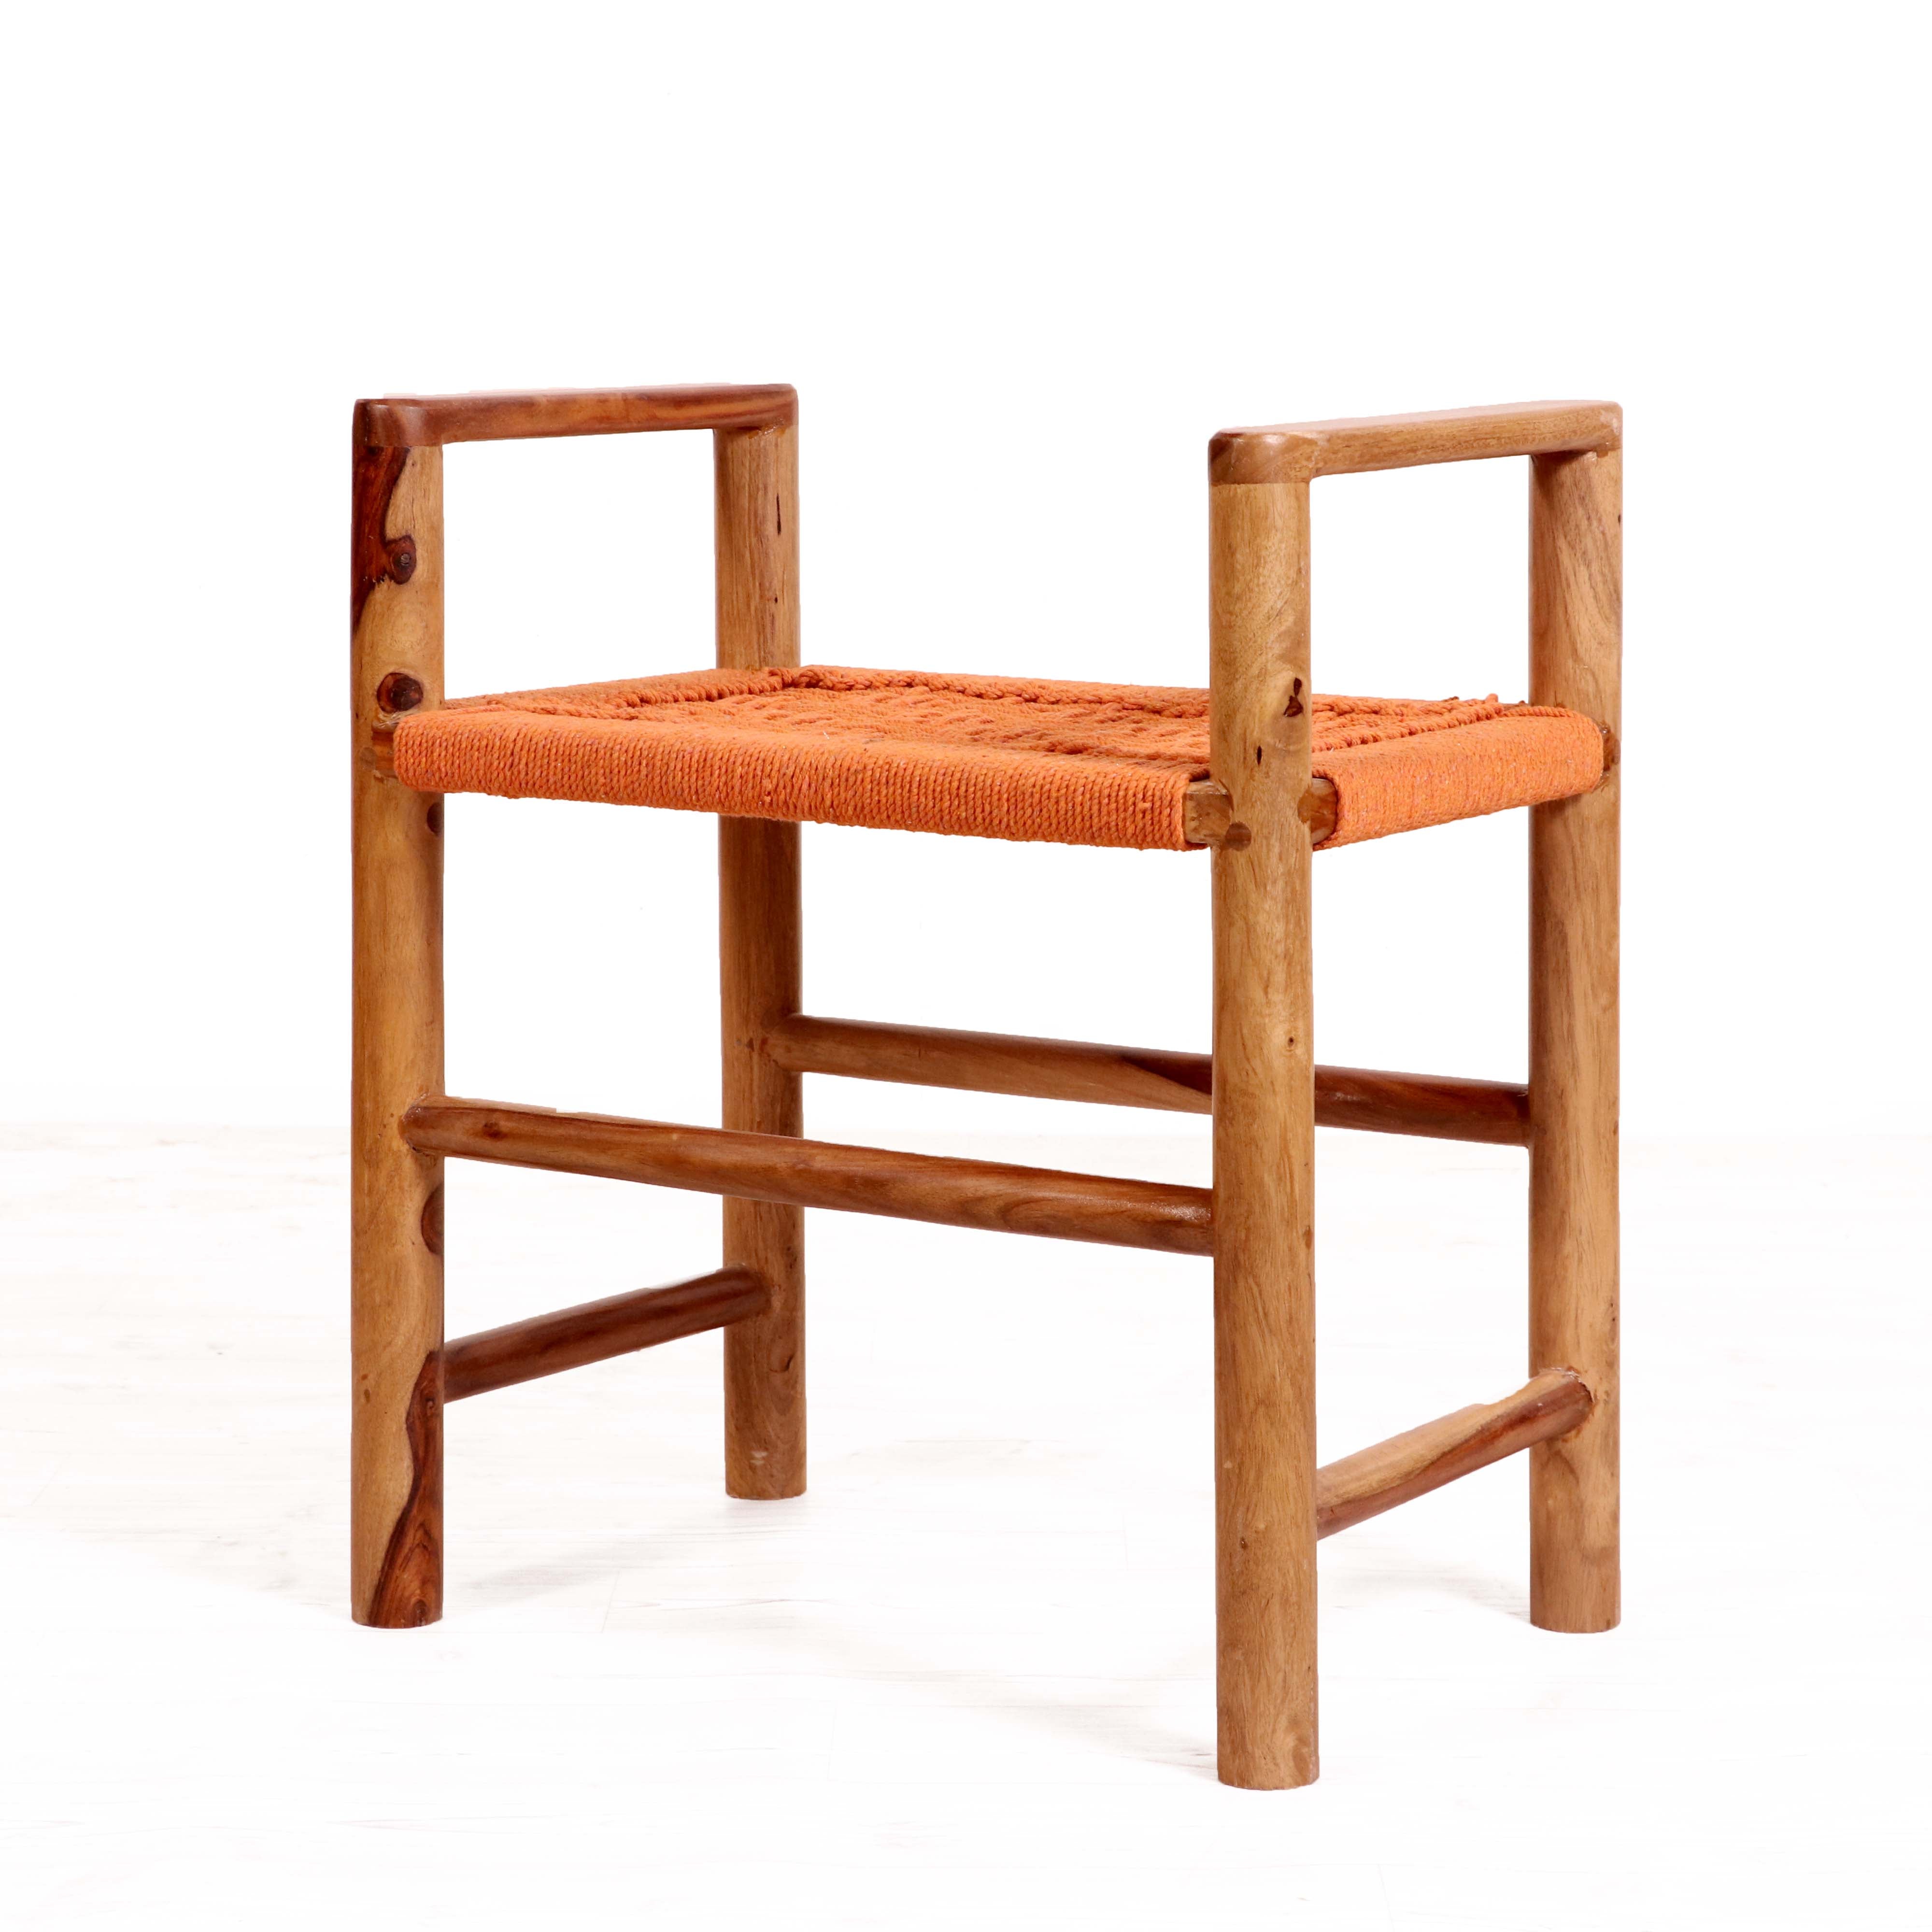 Sheesham wood weaved stool Stool